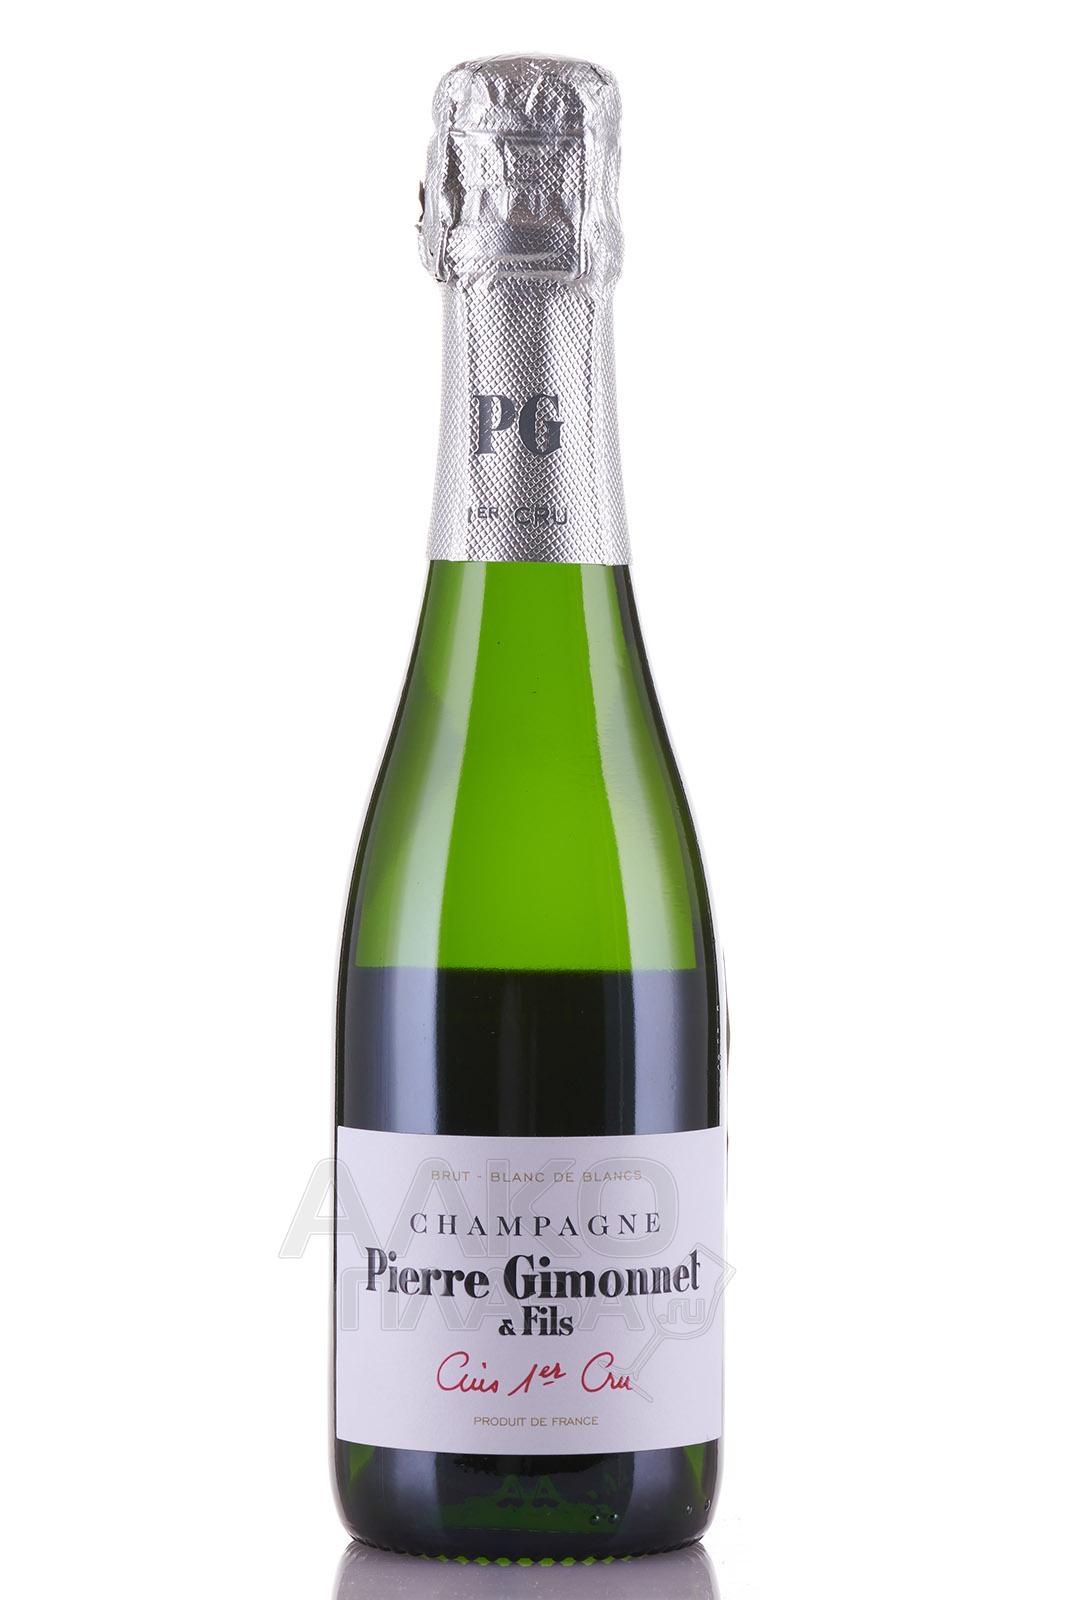 Champagne Pierre Gimonnet & Fils Cuis 1er Cru Brut - шампанское Пьер Жимоне э Фис Кюве Кюи Премье Крю брют 0.375 л